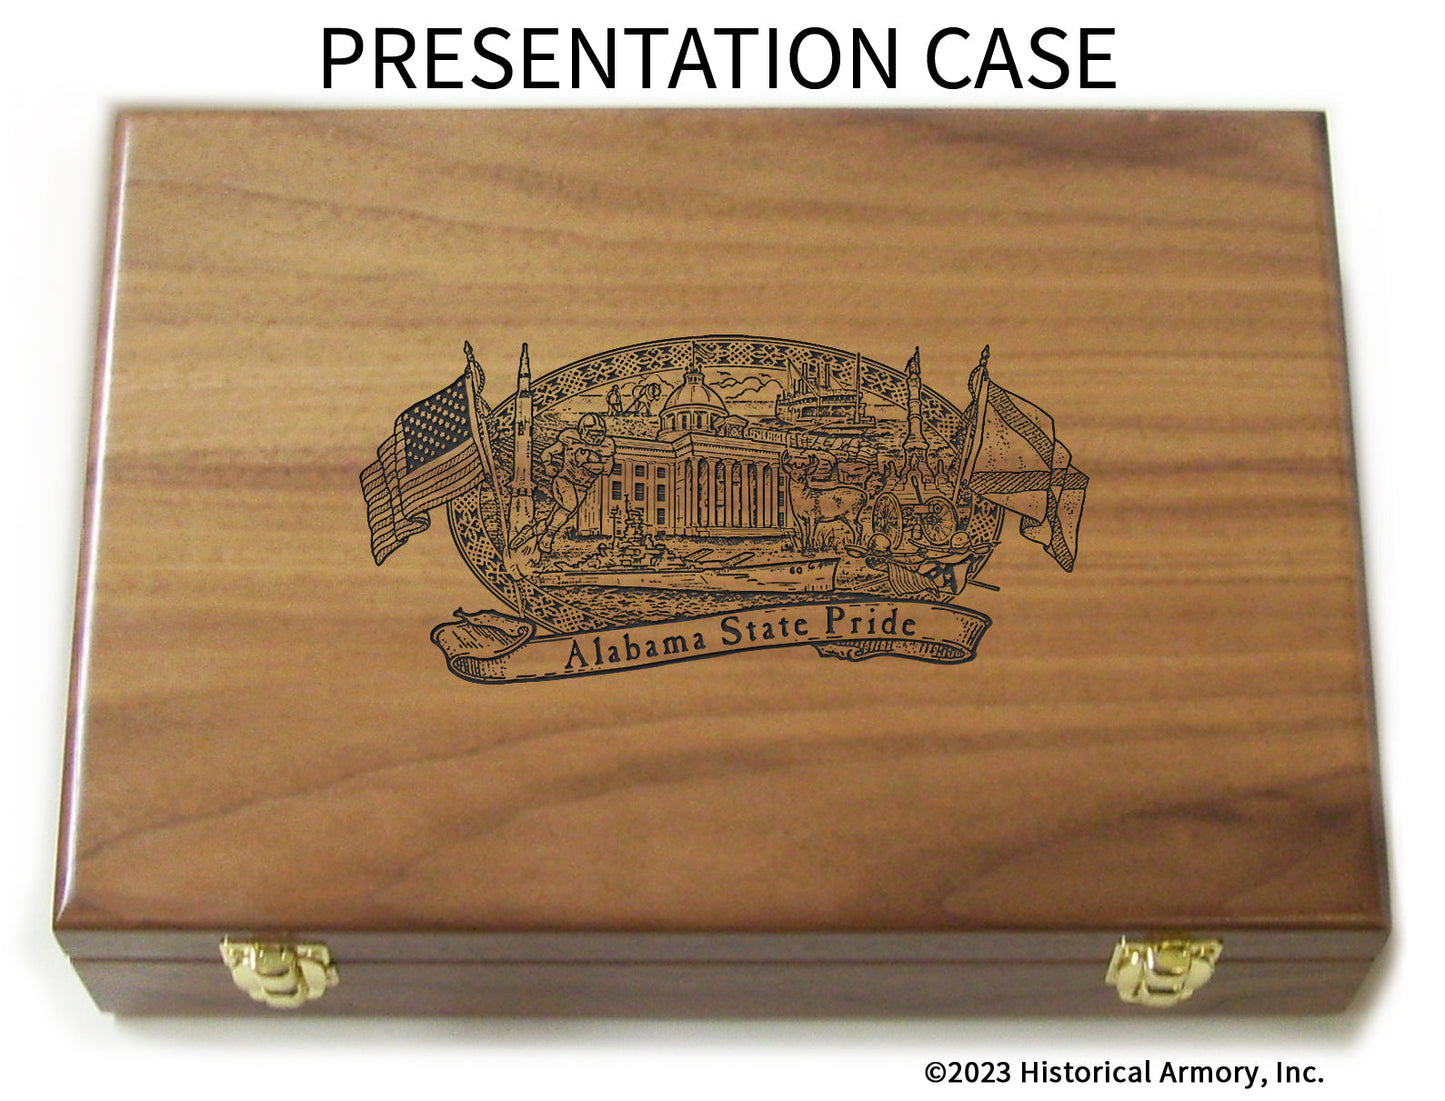 Alabama State Pride Limited Edition Engraved 1911 Presentation Case